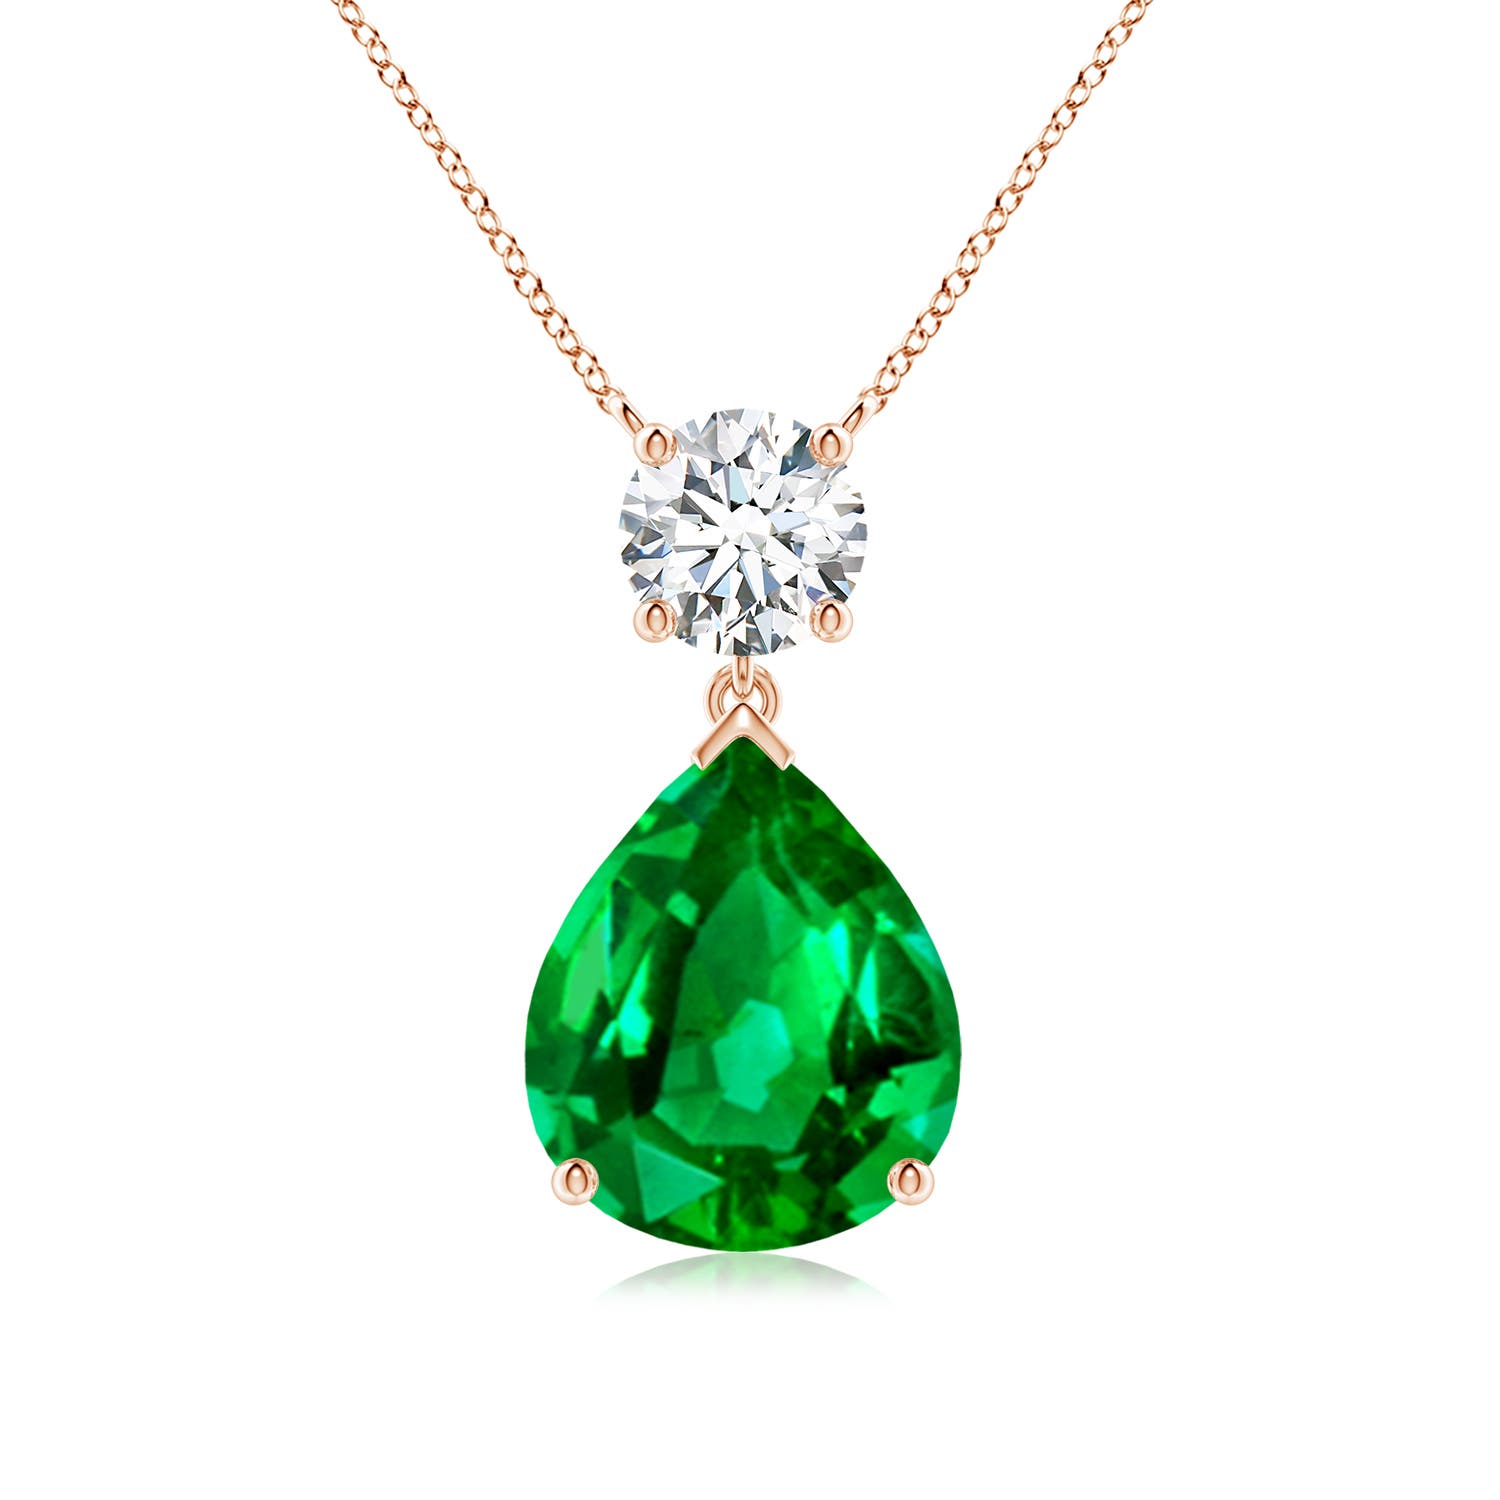 AAAA - Emerald / 5.21 CT / 14 KT Rose Gold